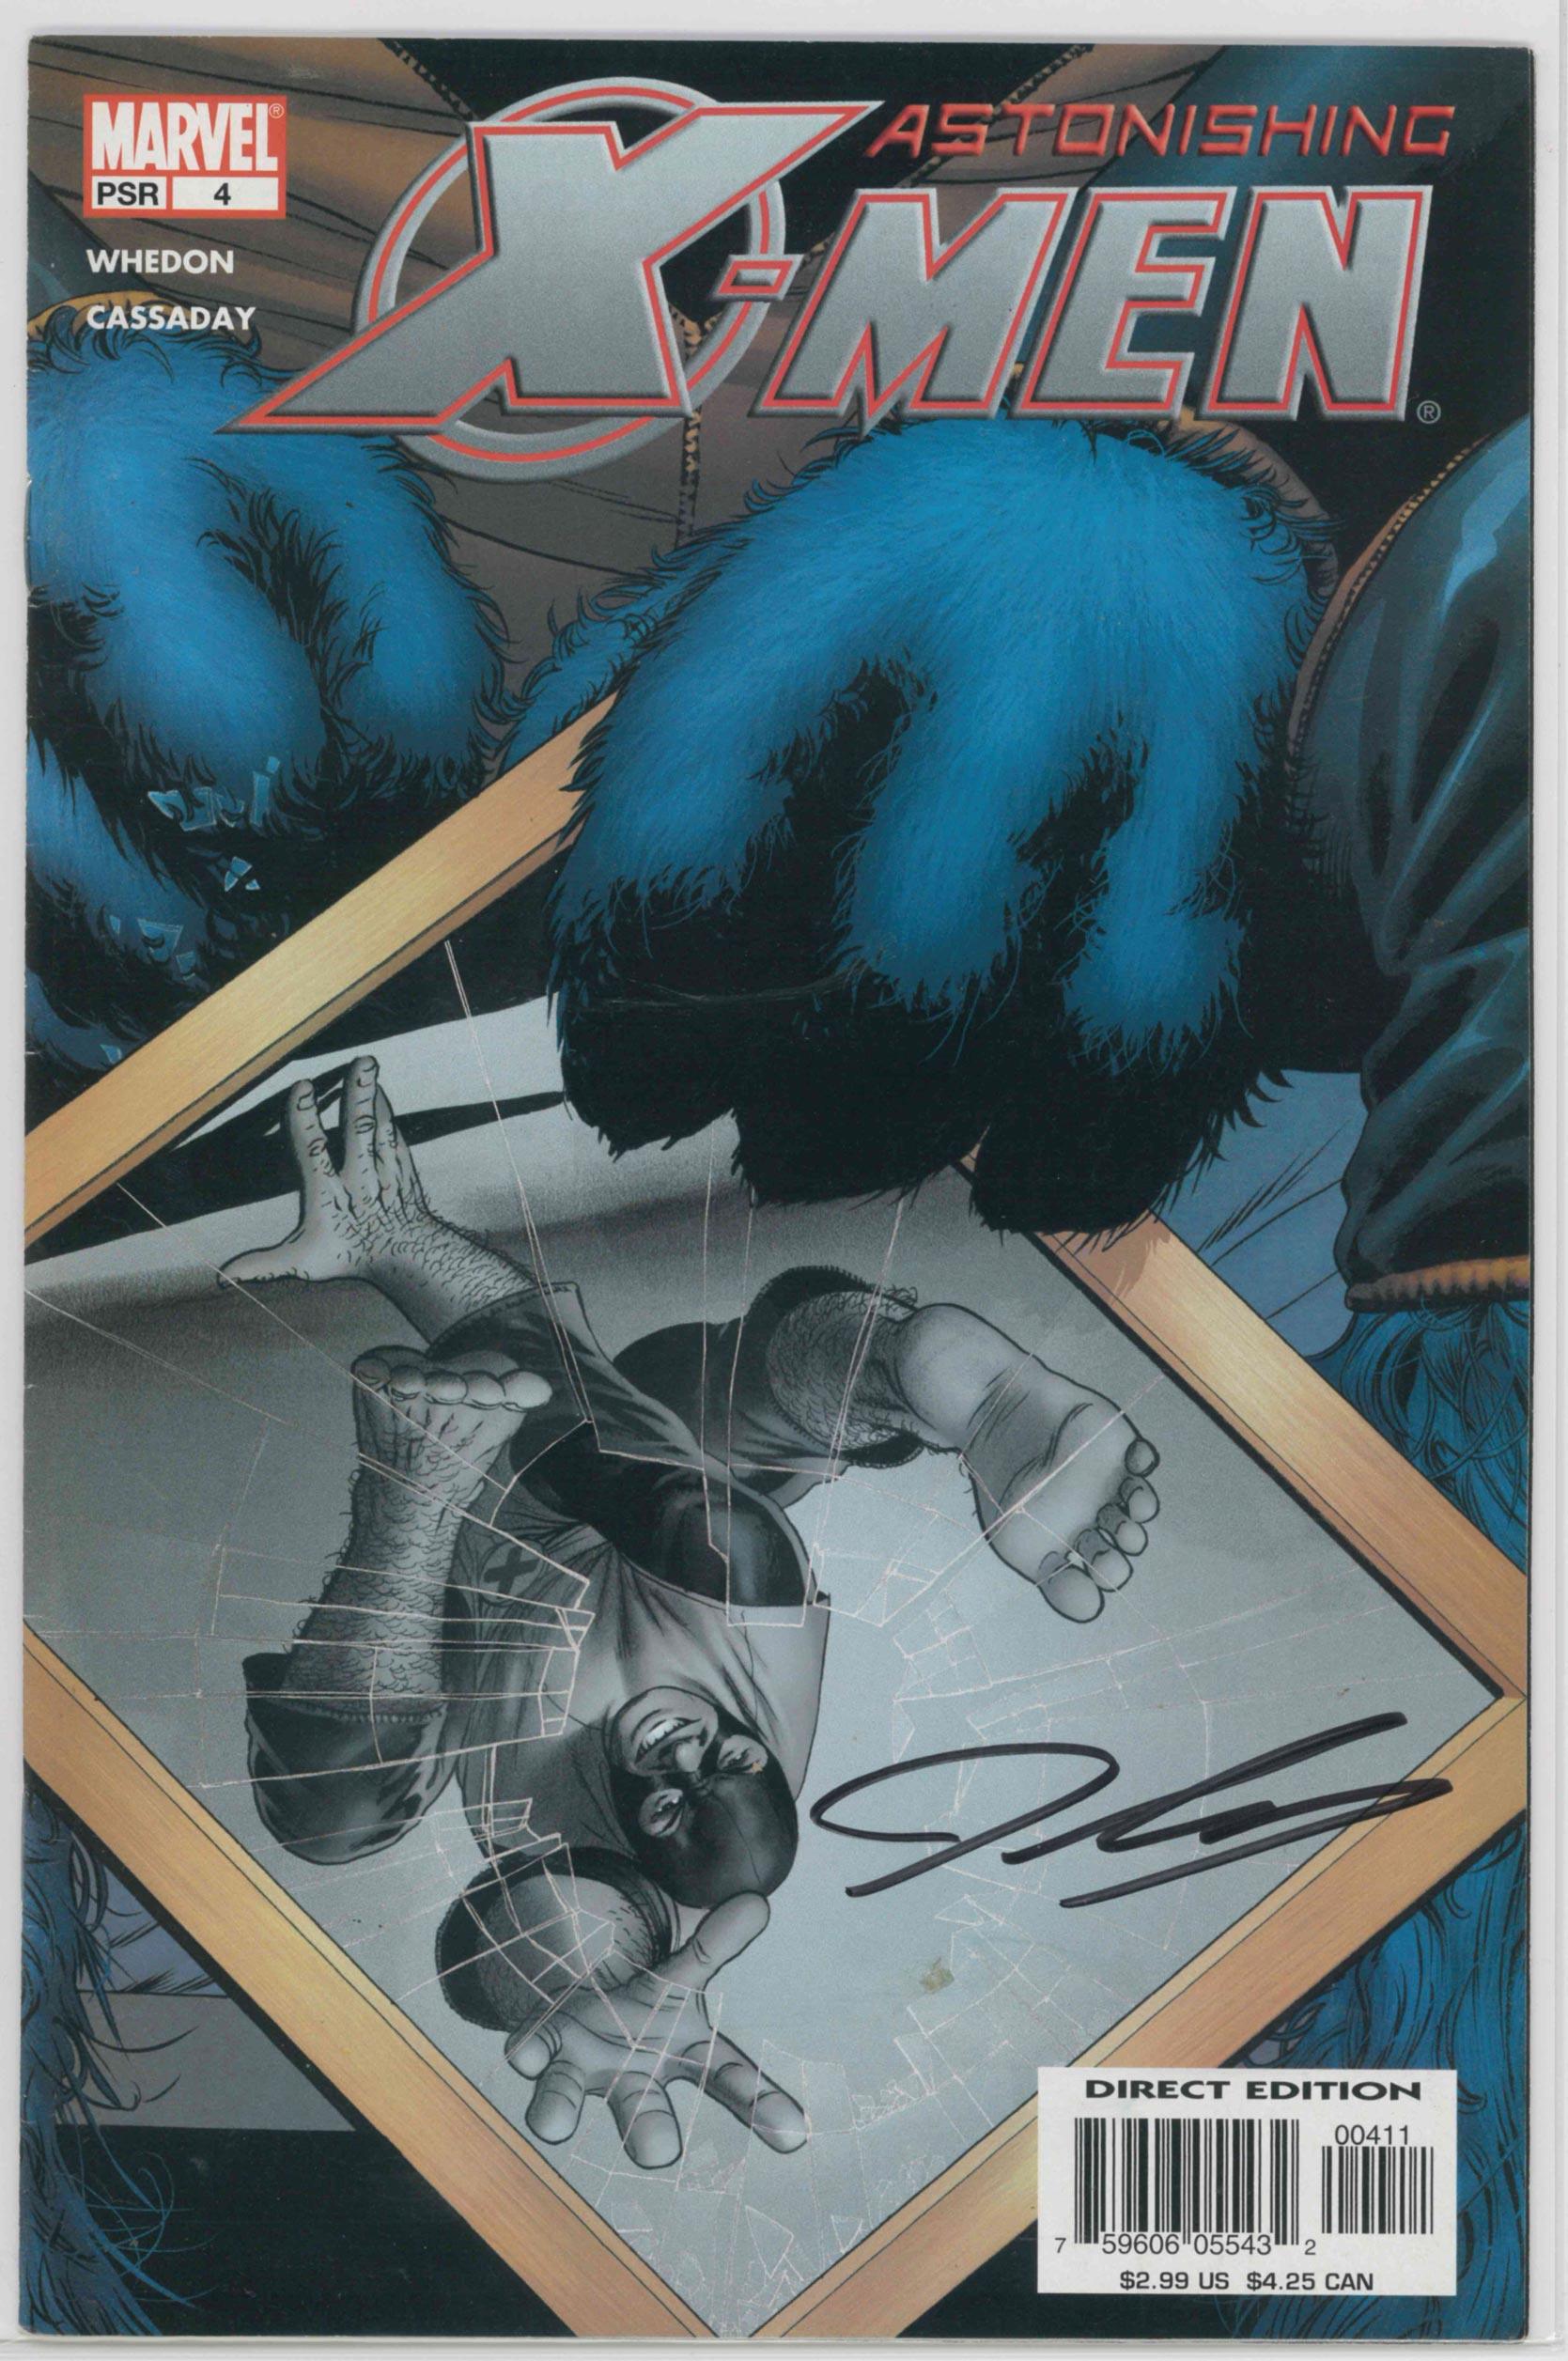 ASTONISHING X-MEN VOL 3 #4 - SIGNED BY JOHN CASSADAY (VG/FN) - Kings Comics